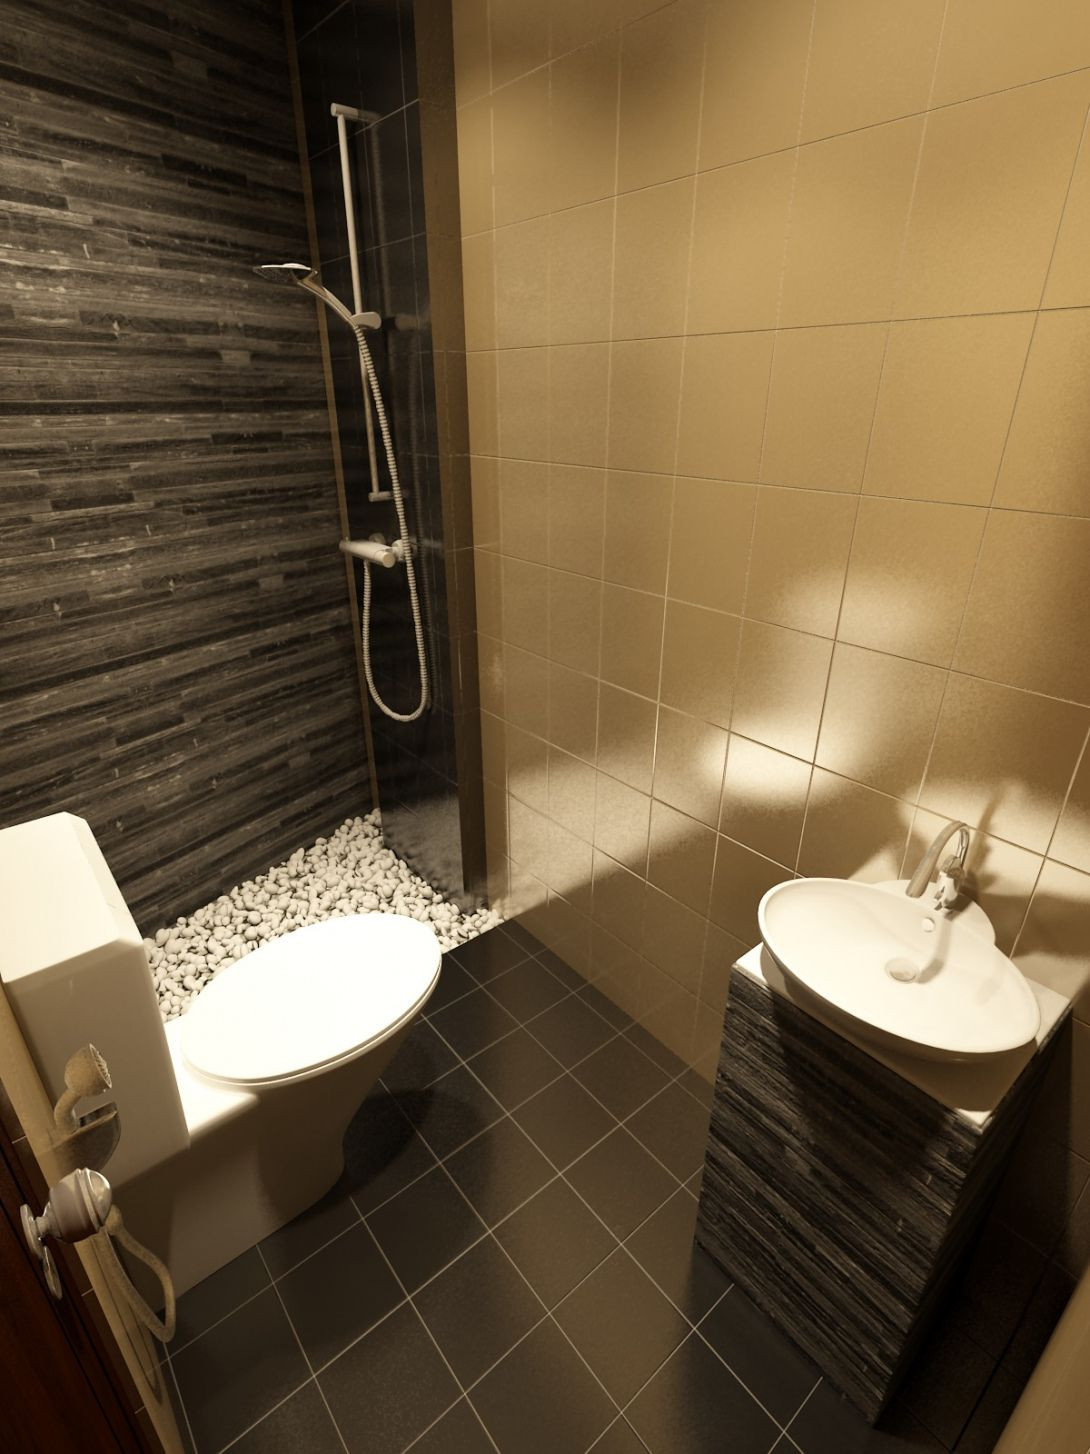 desain kamar mandi minimalis ukuran 1x1 5 arsitekhom